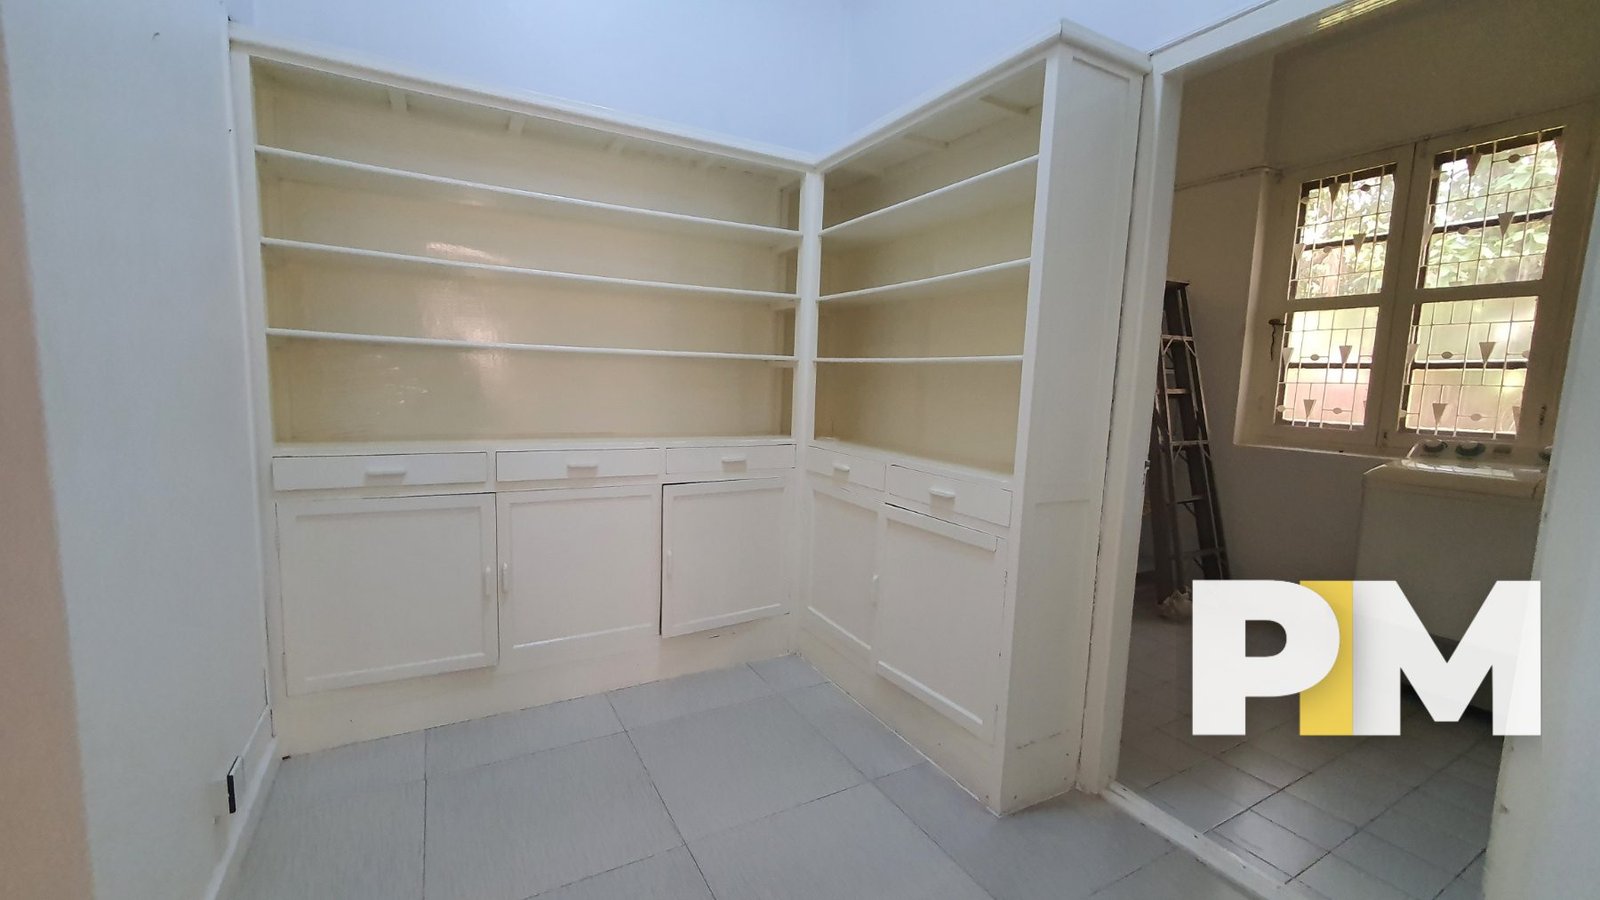 Room with shelf - Yangon Real Estate